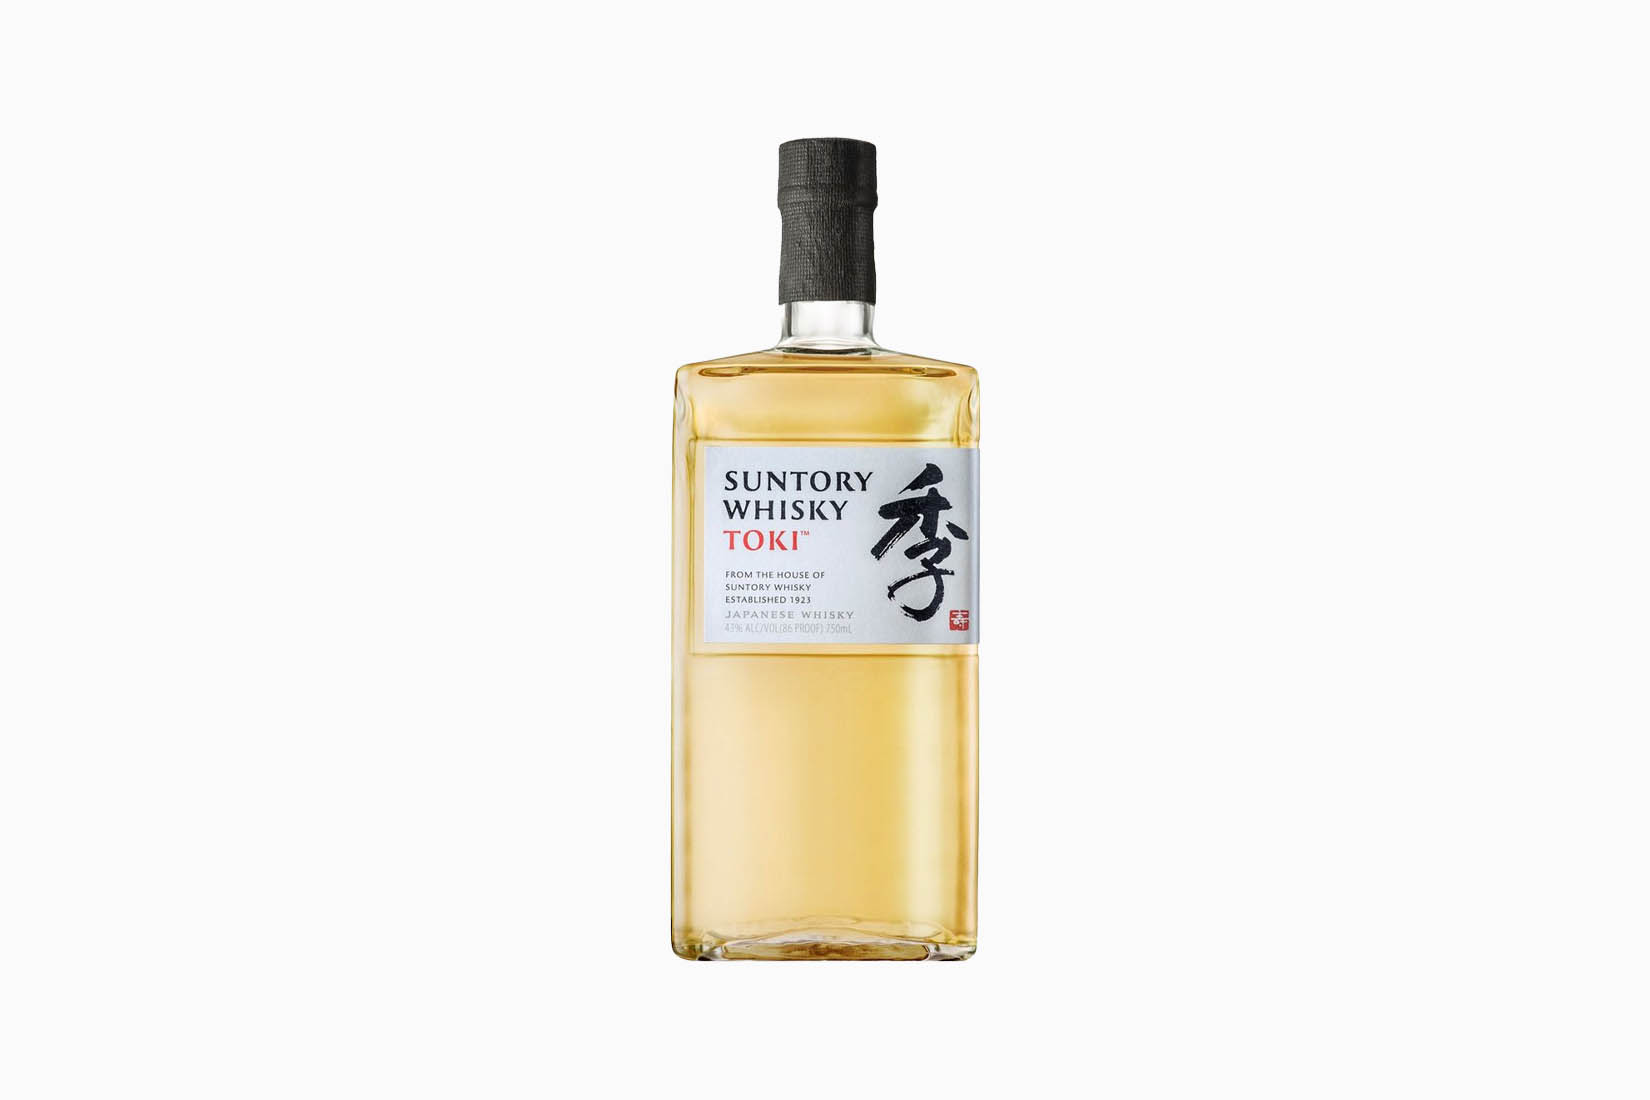 suntory toki japanese whisky price review Luxe Digital